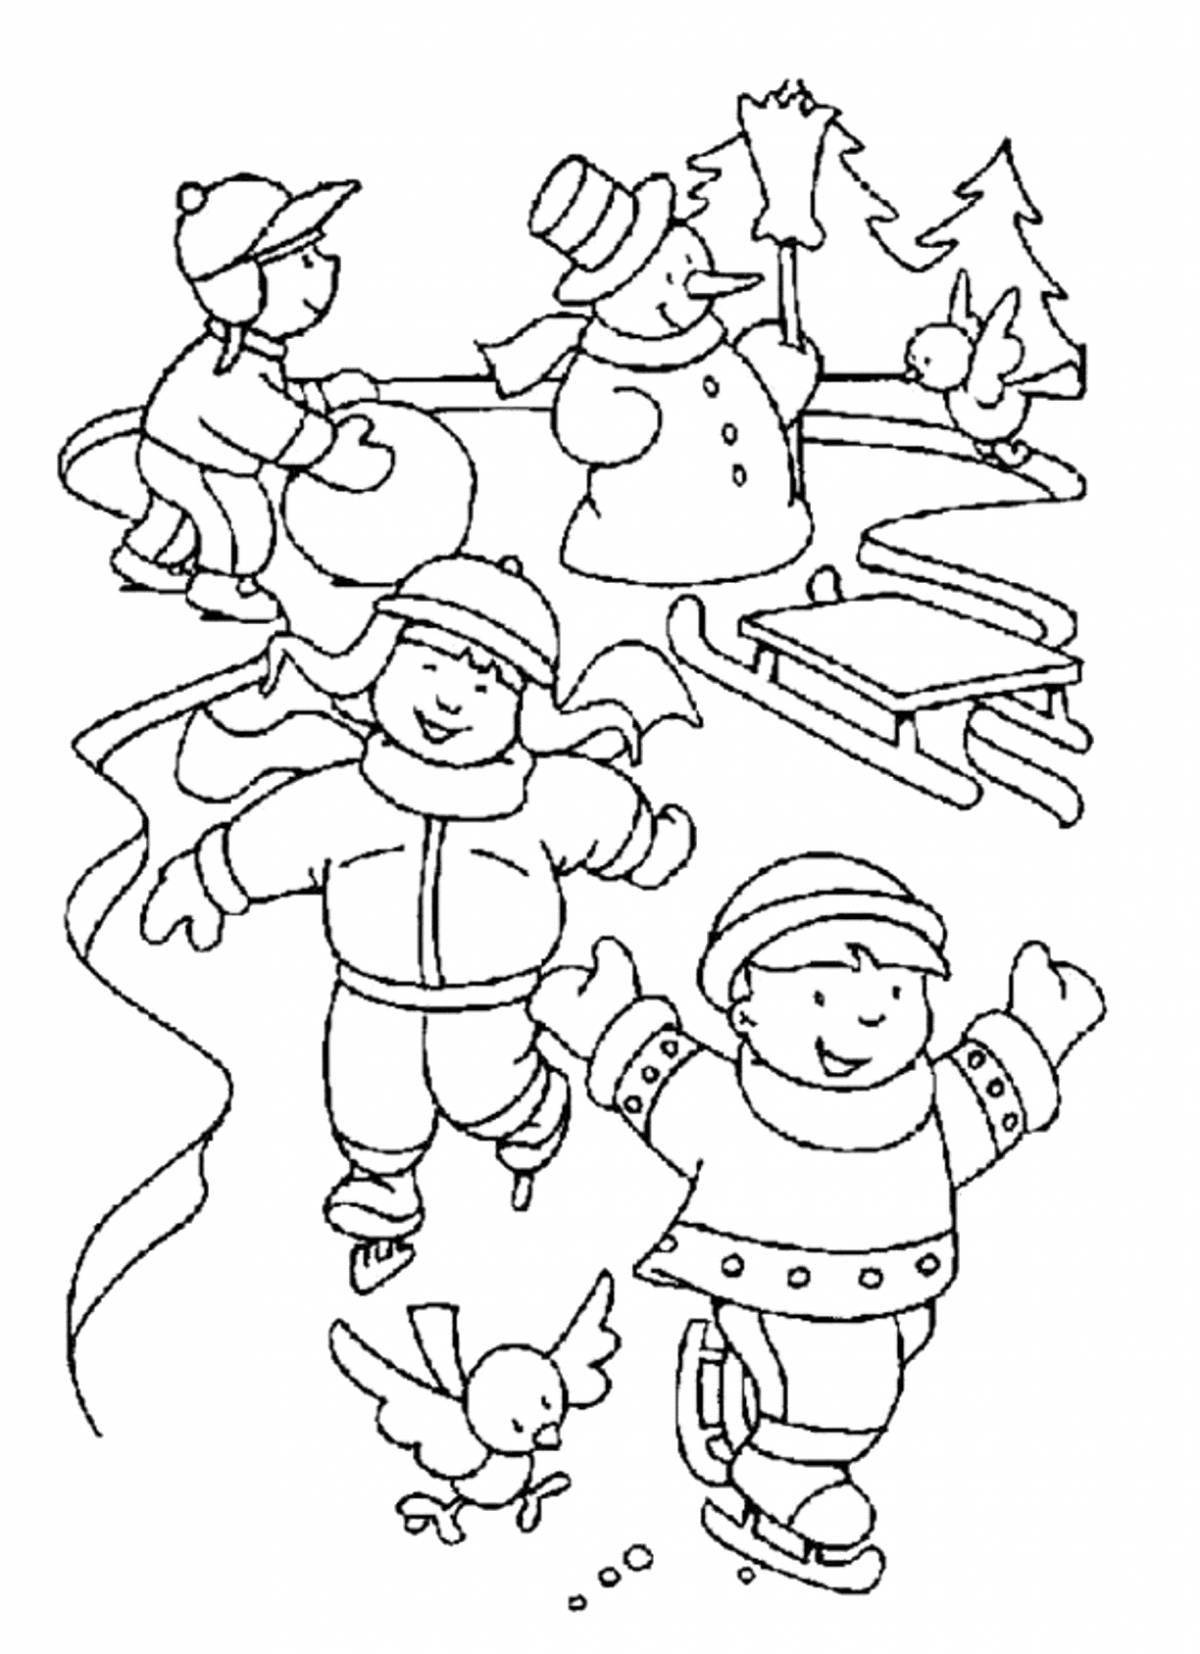 A magical winter fun coloring book for preschoolers